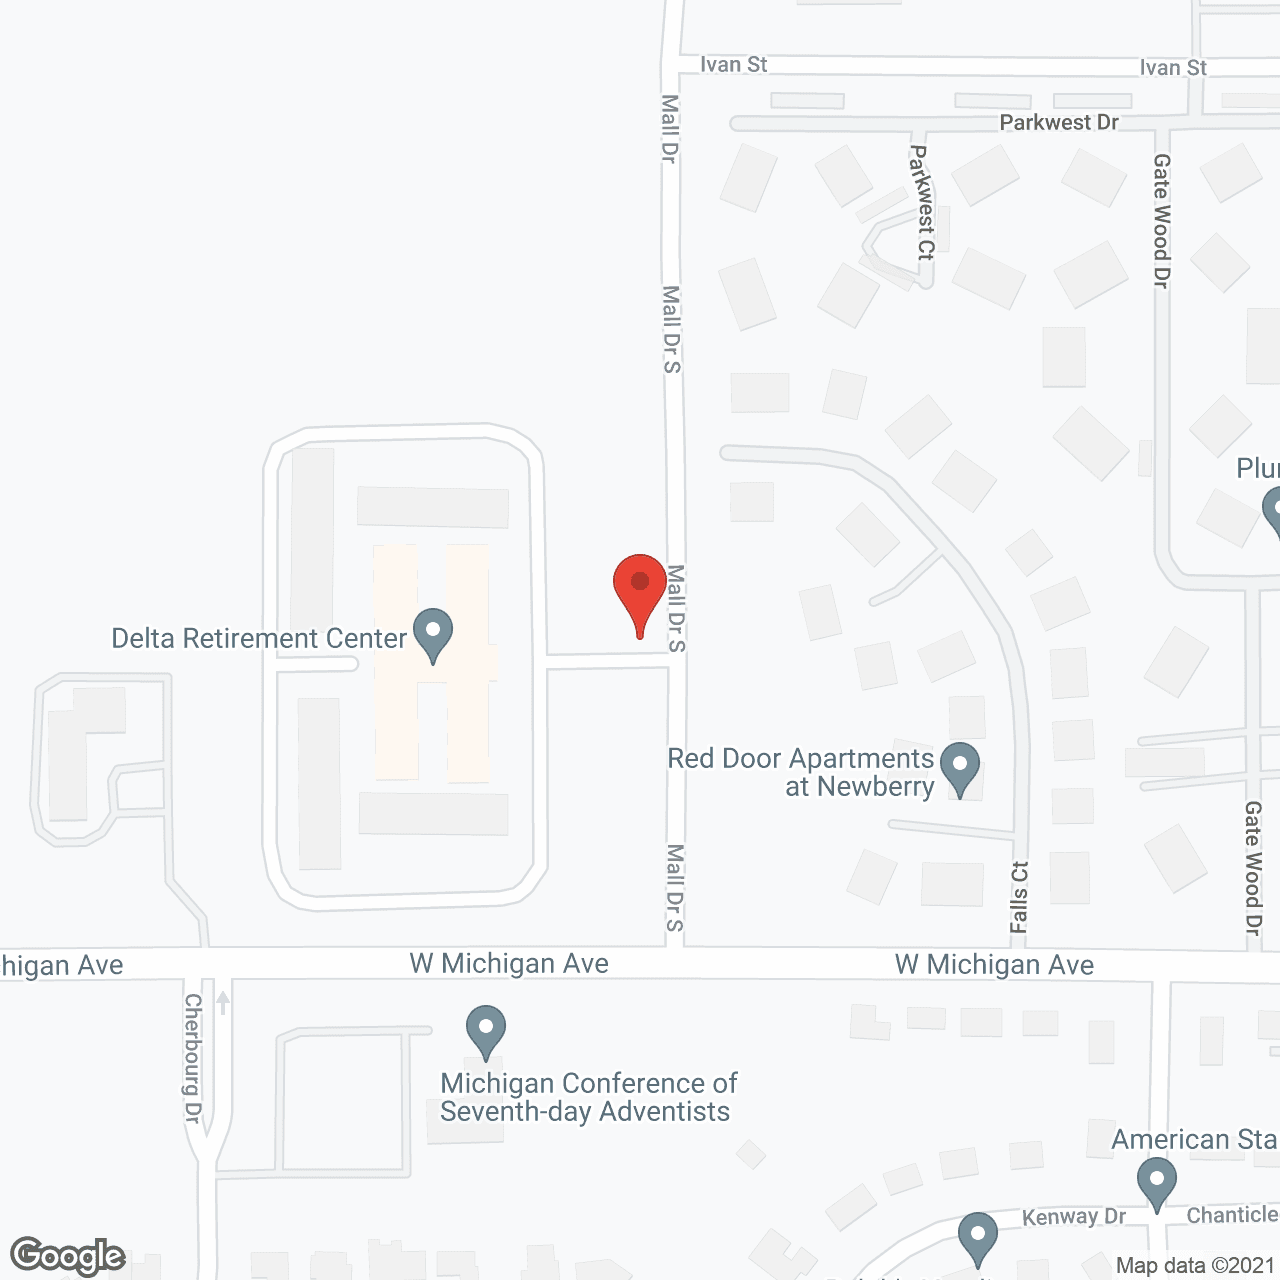 Delta Retirement Center in google map